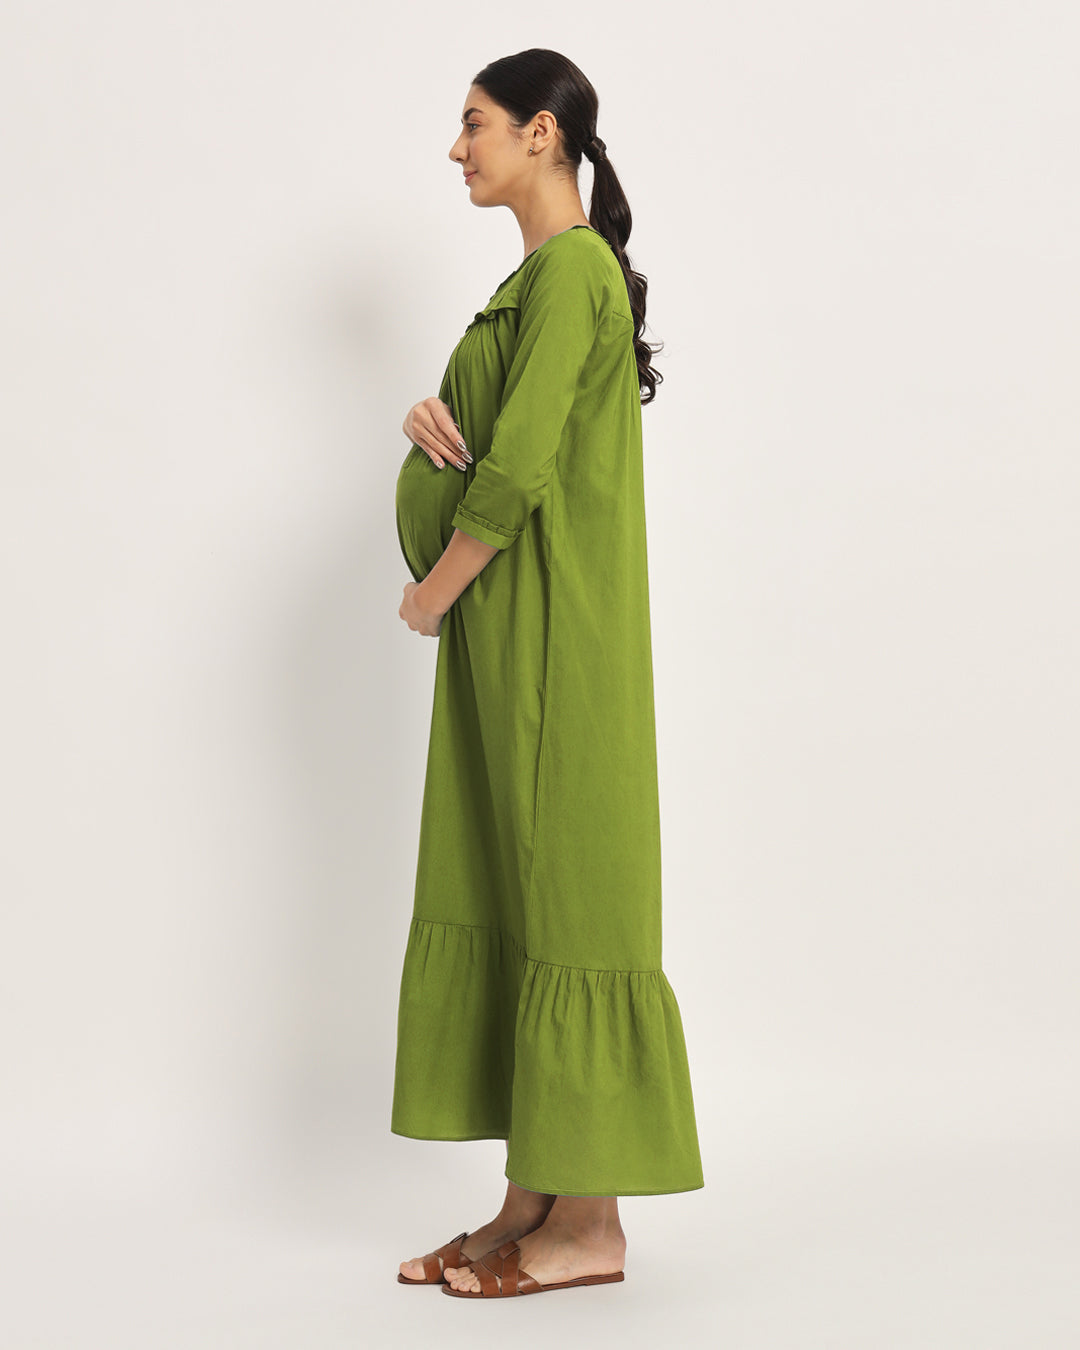 Combo: Iris Pink & Sage Green Bella Mama Maternity & Nursing Dress-Set of 2